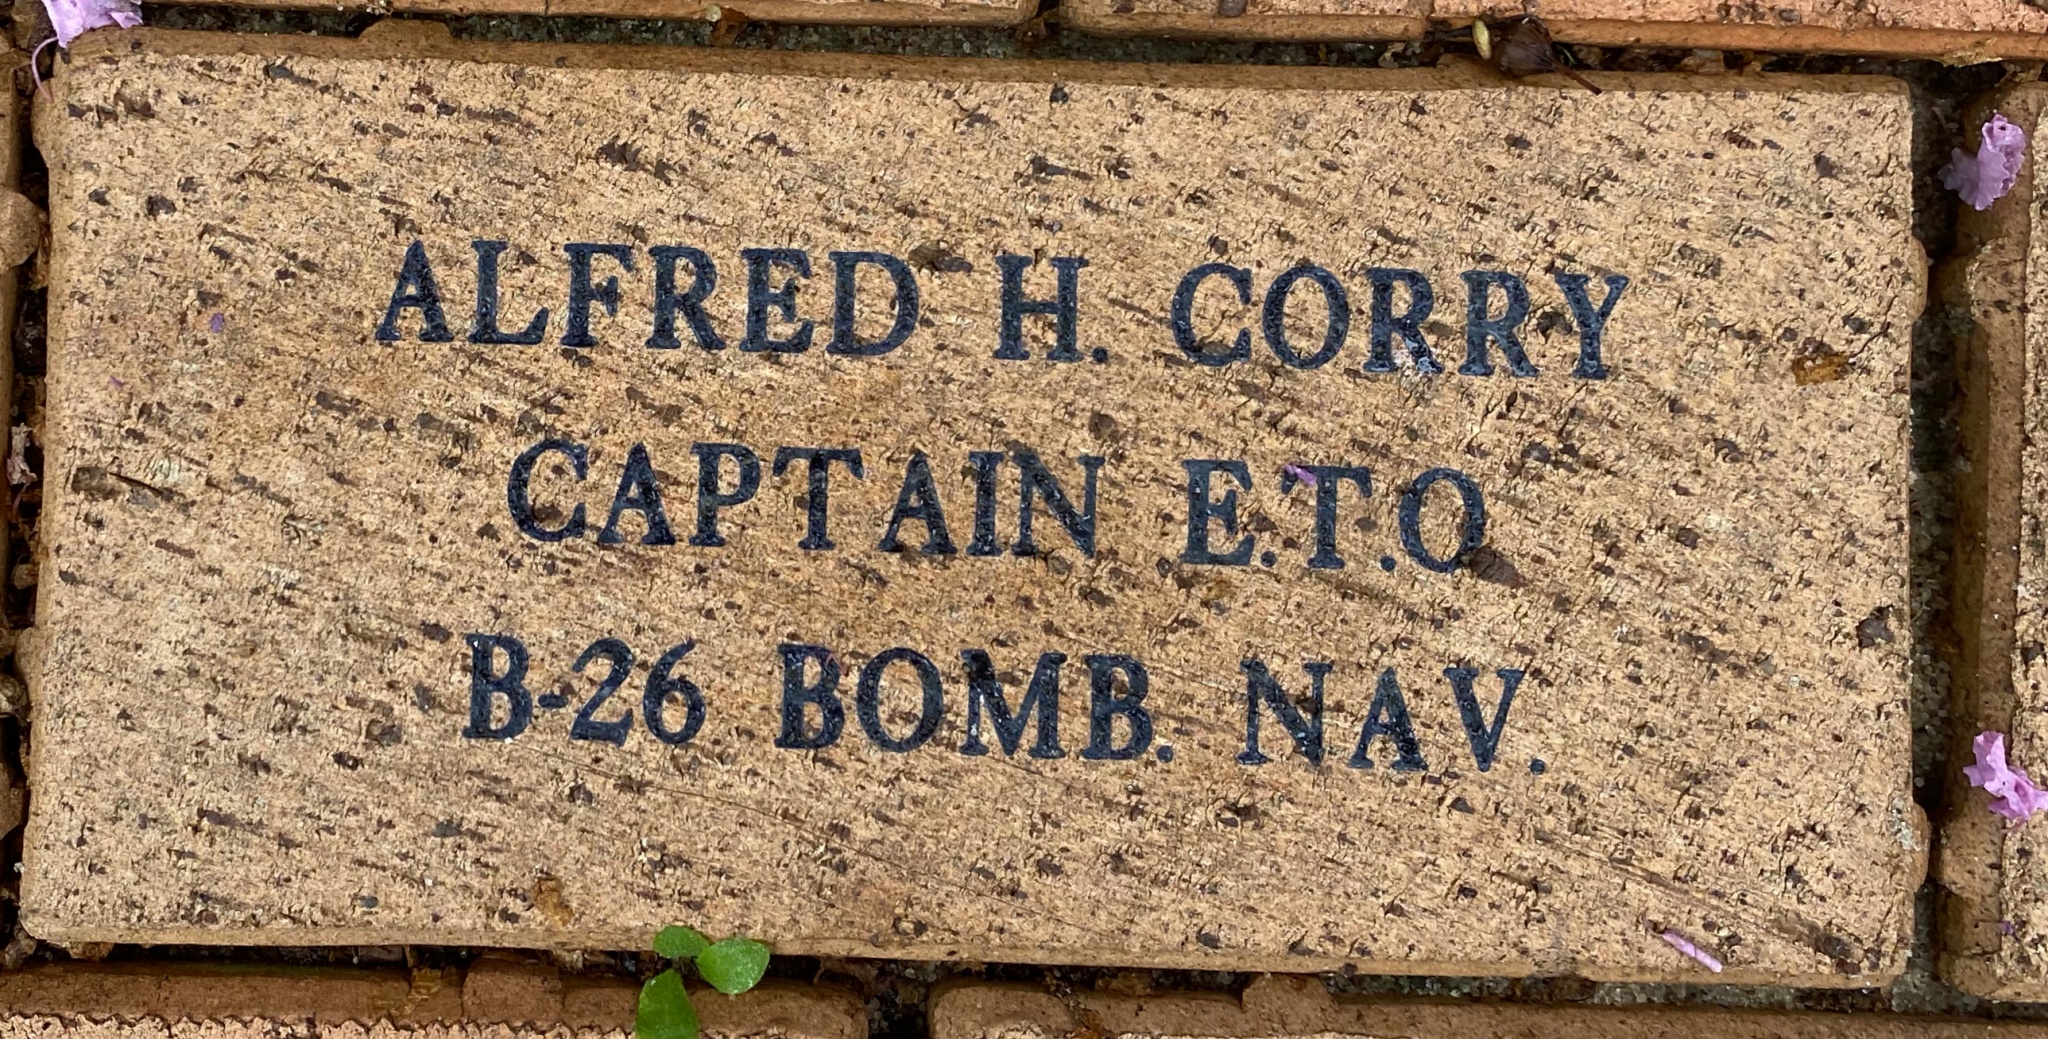 ALFRED H. CORRY CAPTAIN E.T.O B-26 BOMB. NAV.